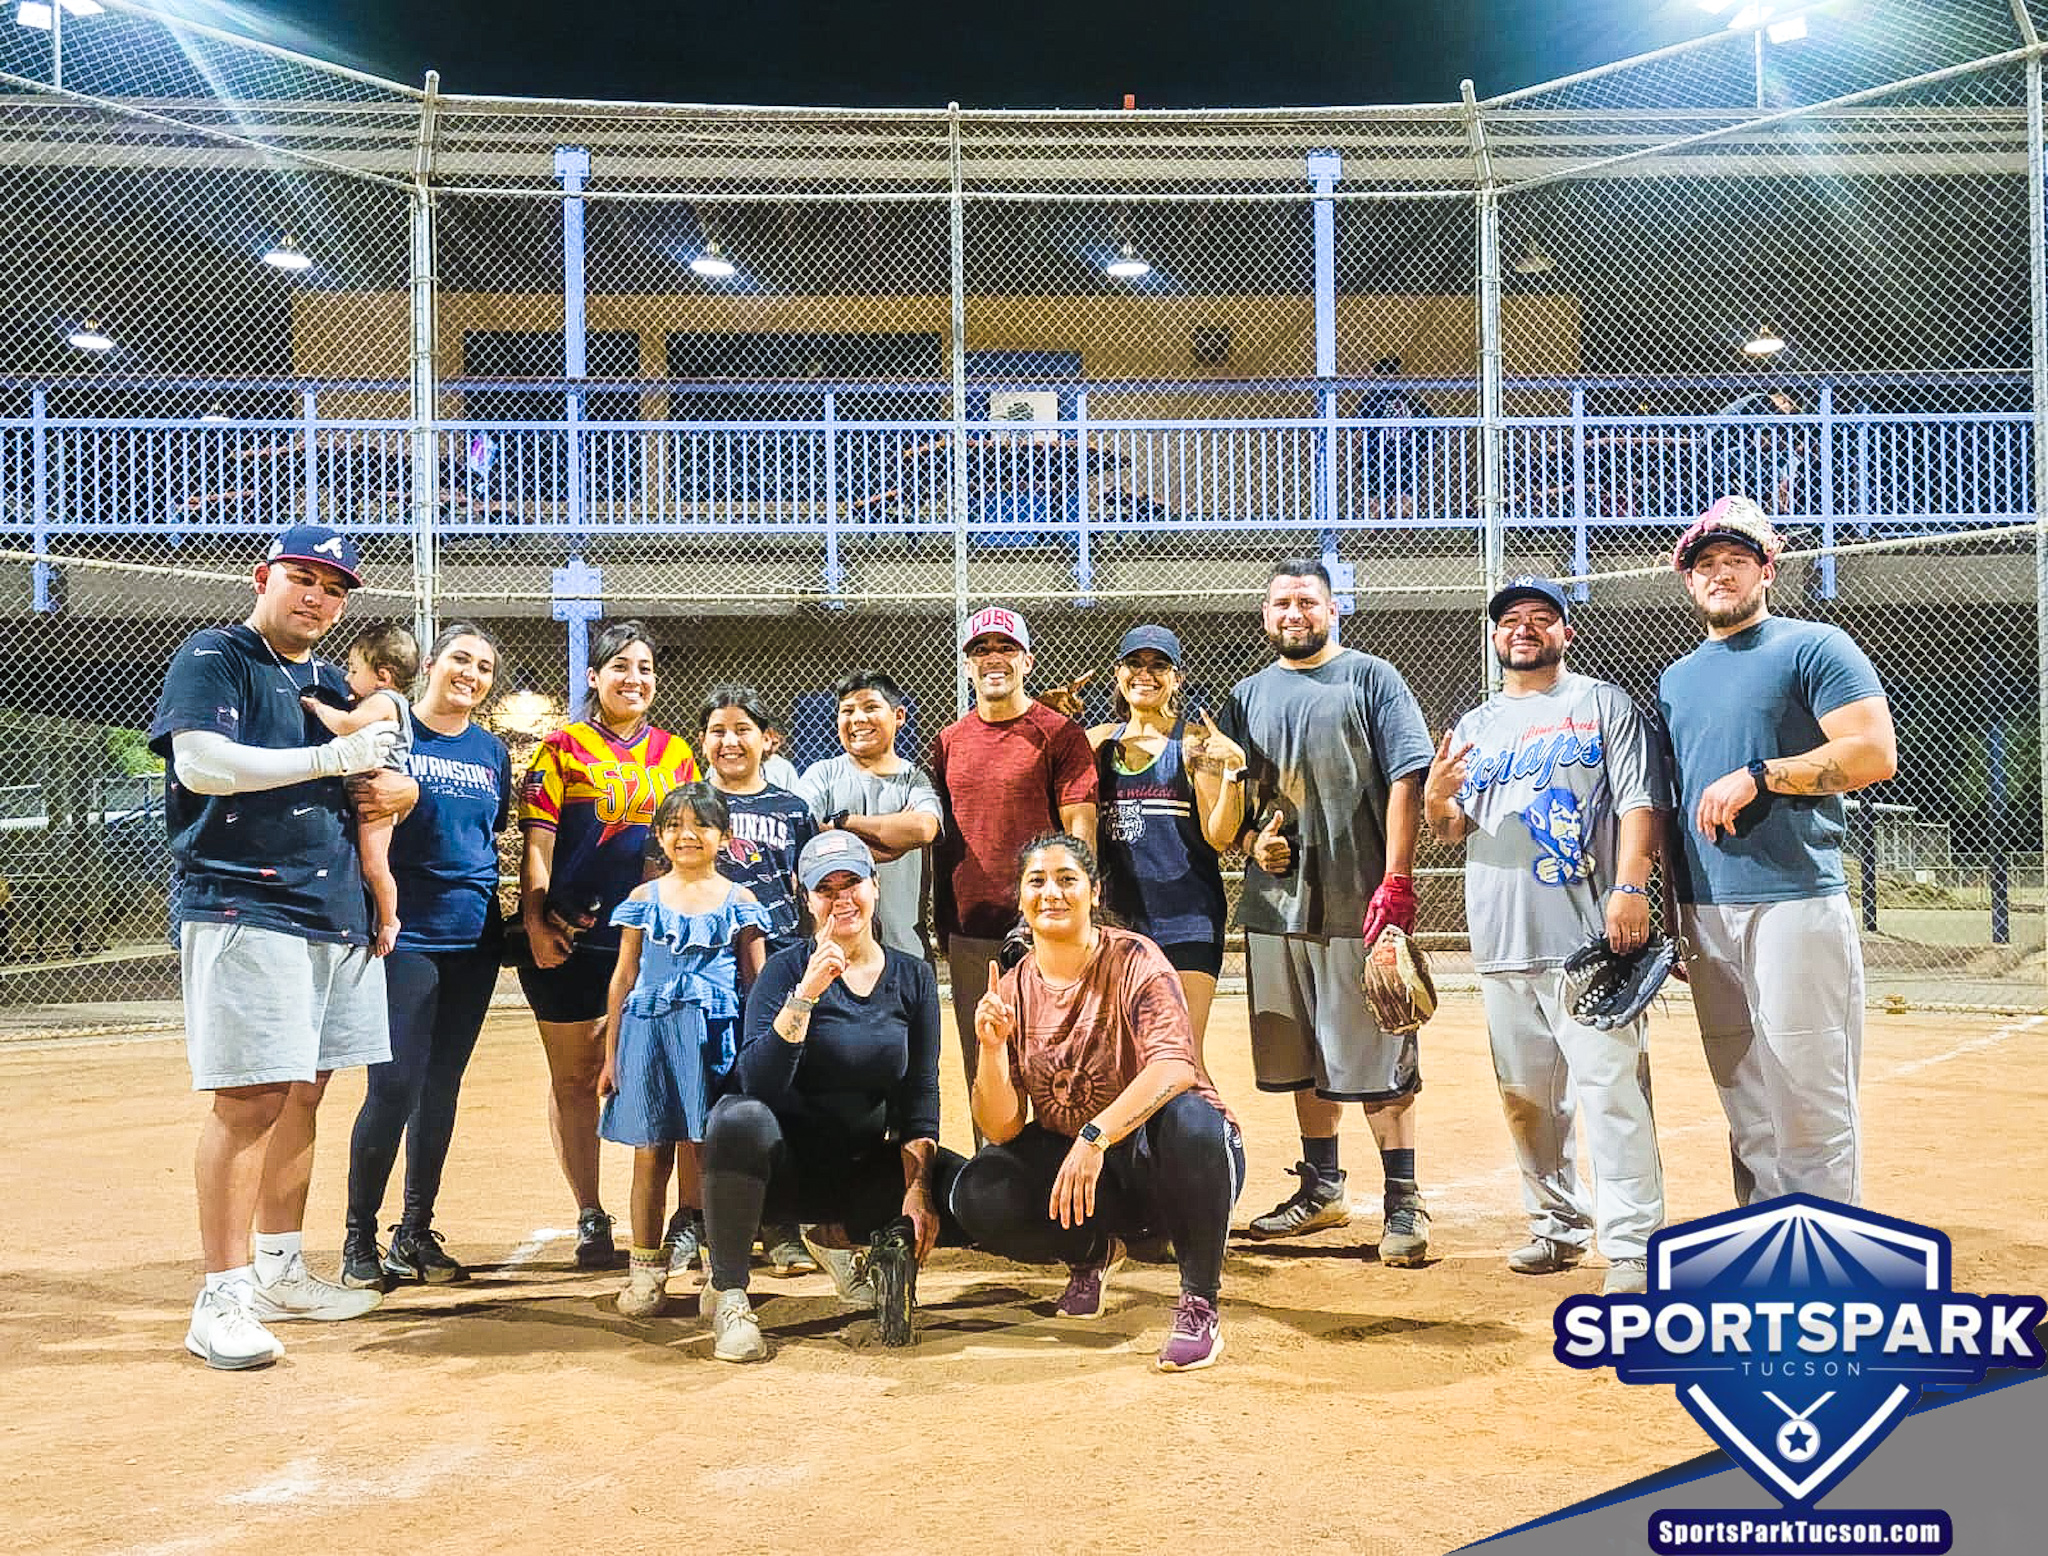 Softball Sun Co-ed 10v10 - E/Rec, Team: Gypsies